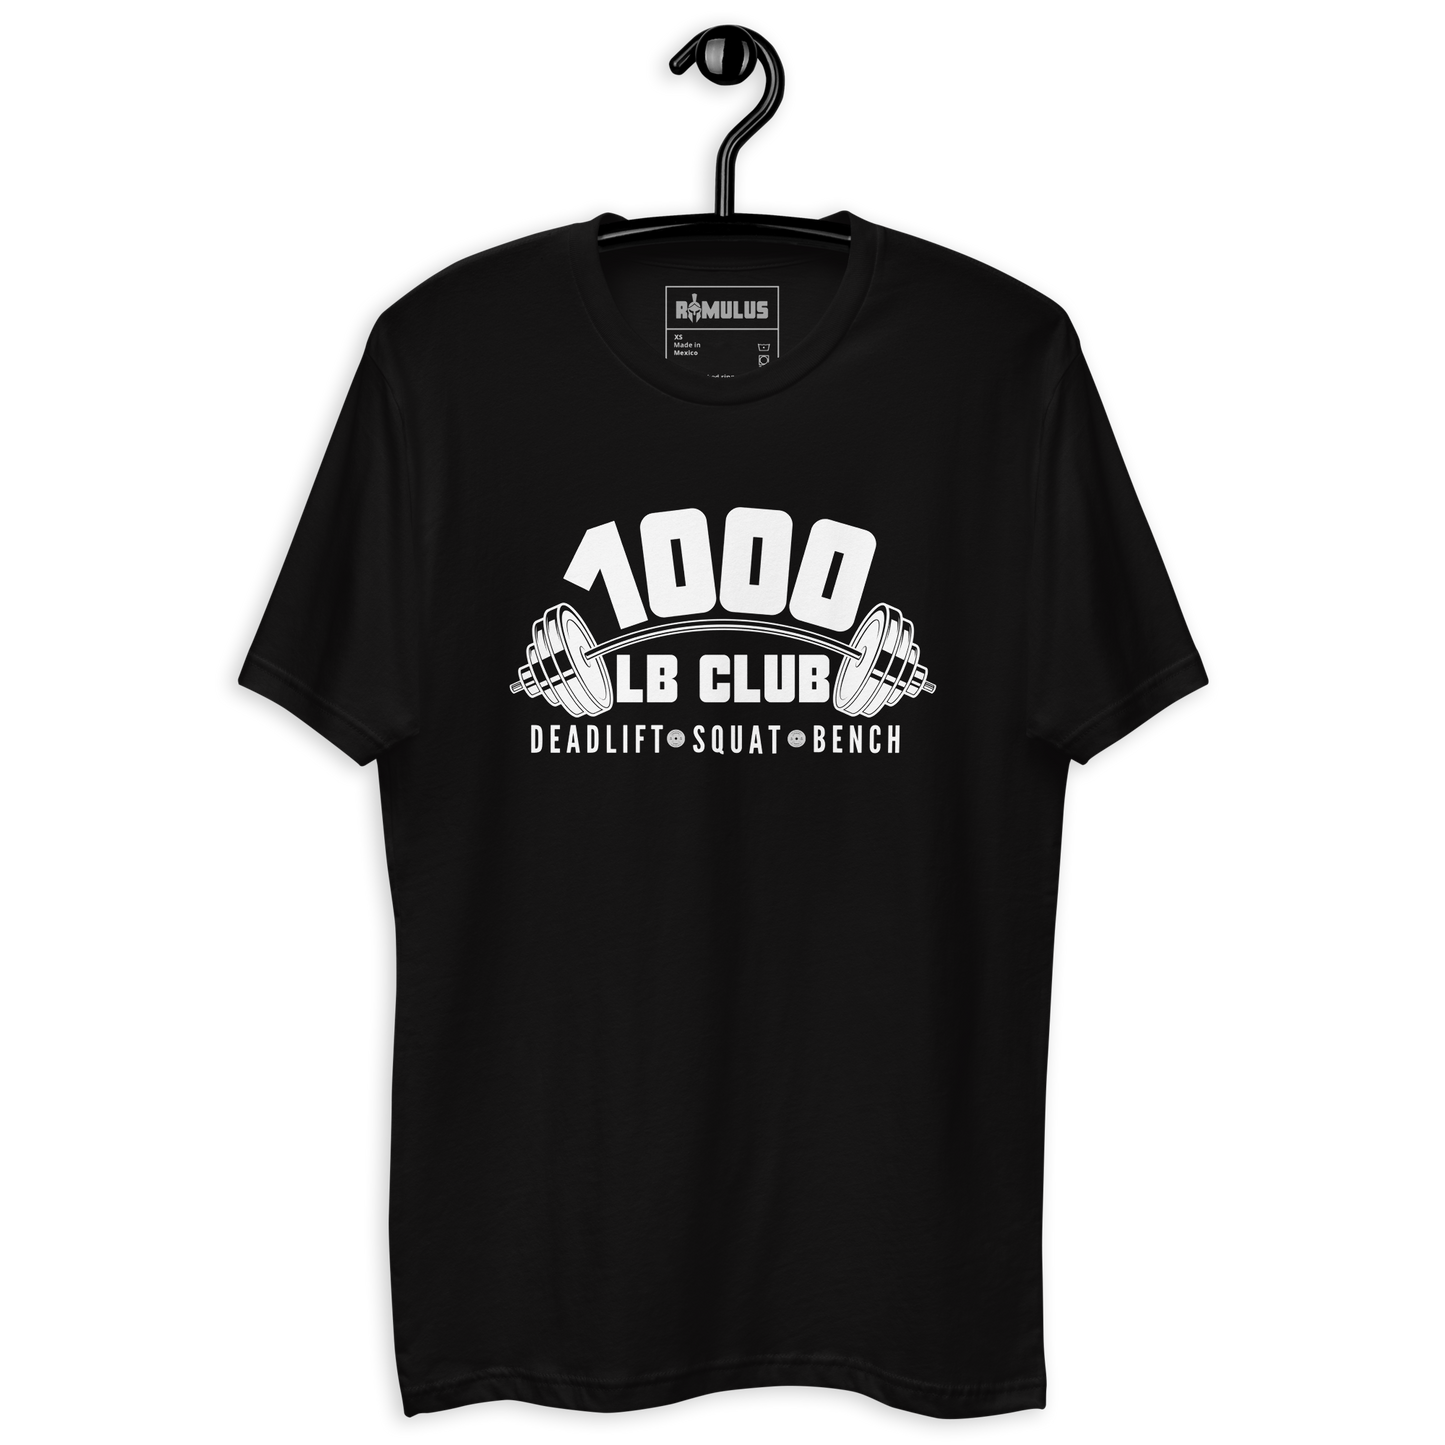 Romulus 1000lb Club Fitted T-Shirt Romulus